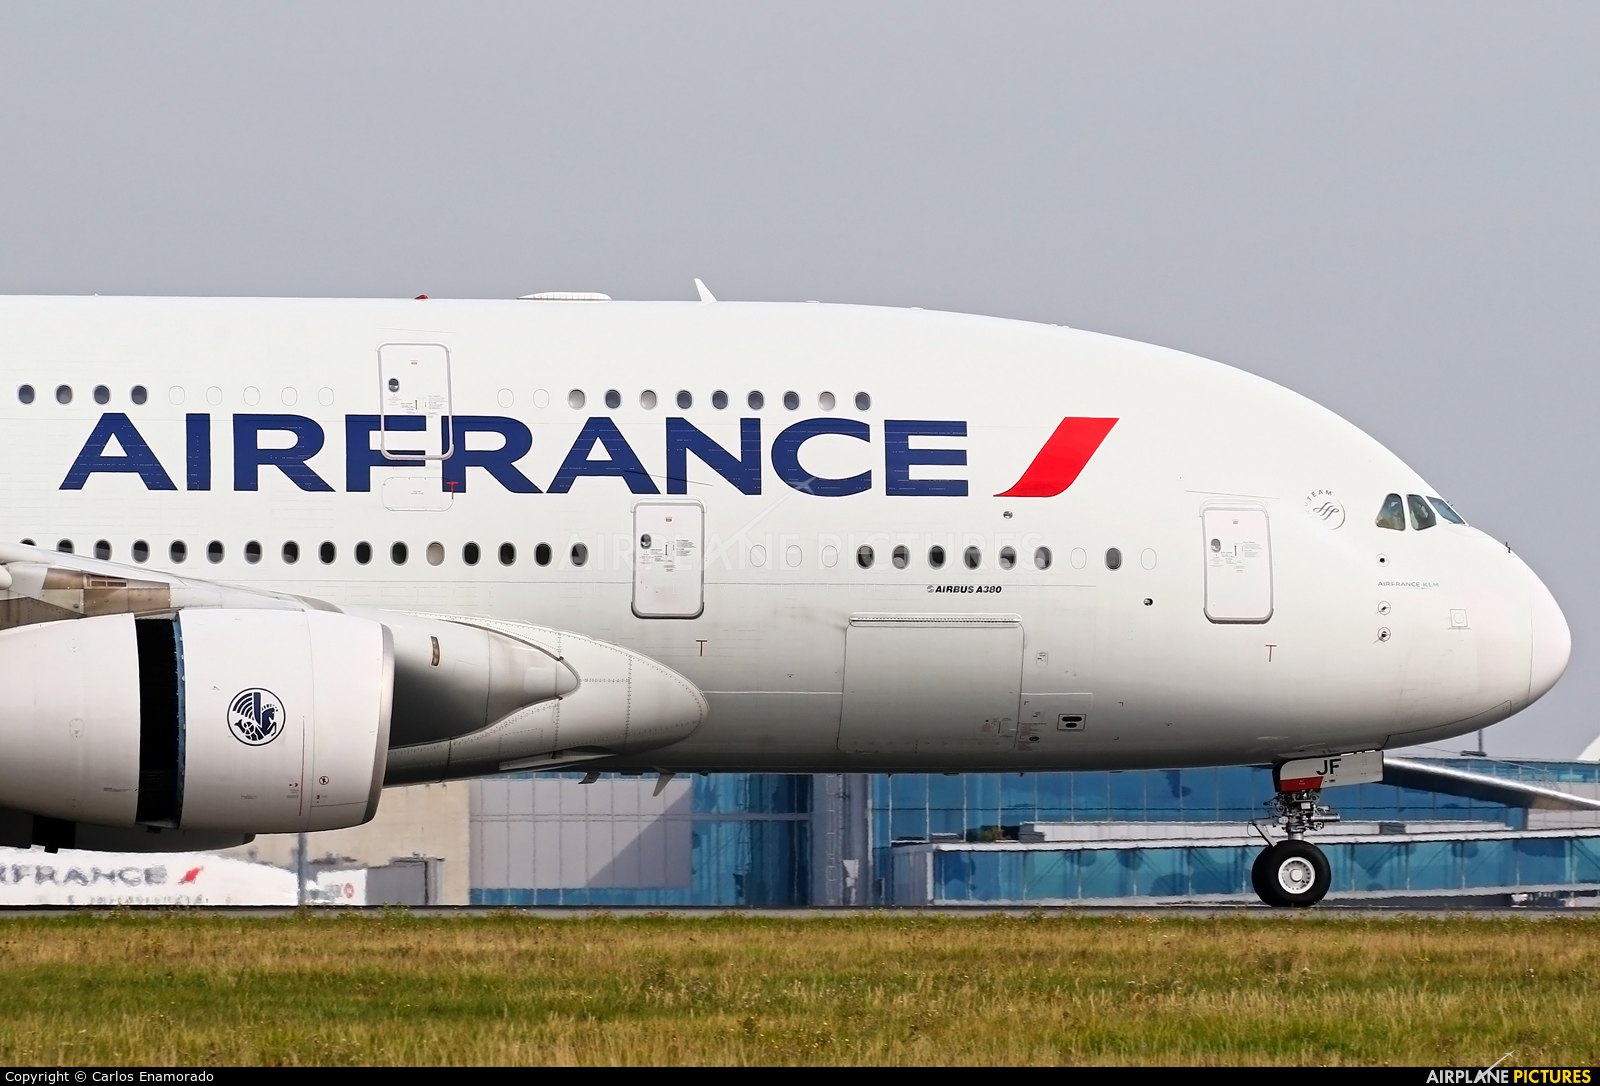 Air France F-HPJF aircraft at Paris - Charles de Gaulle